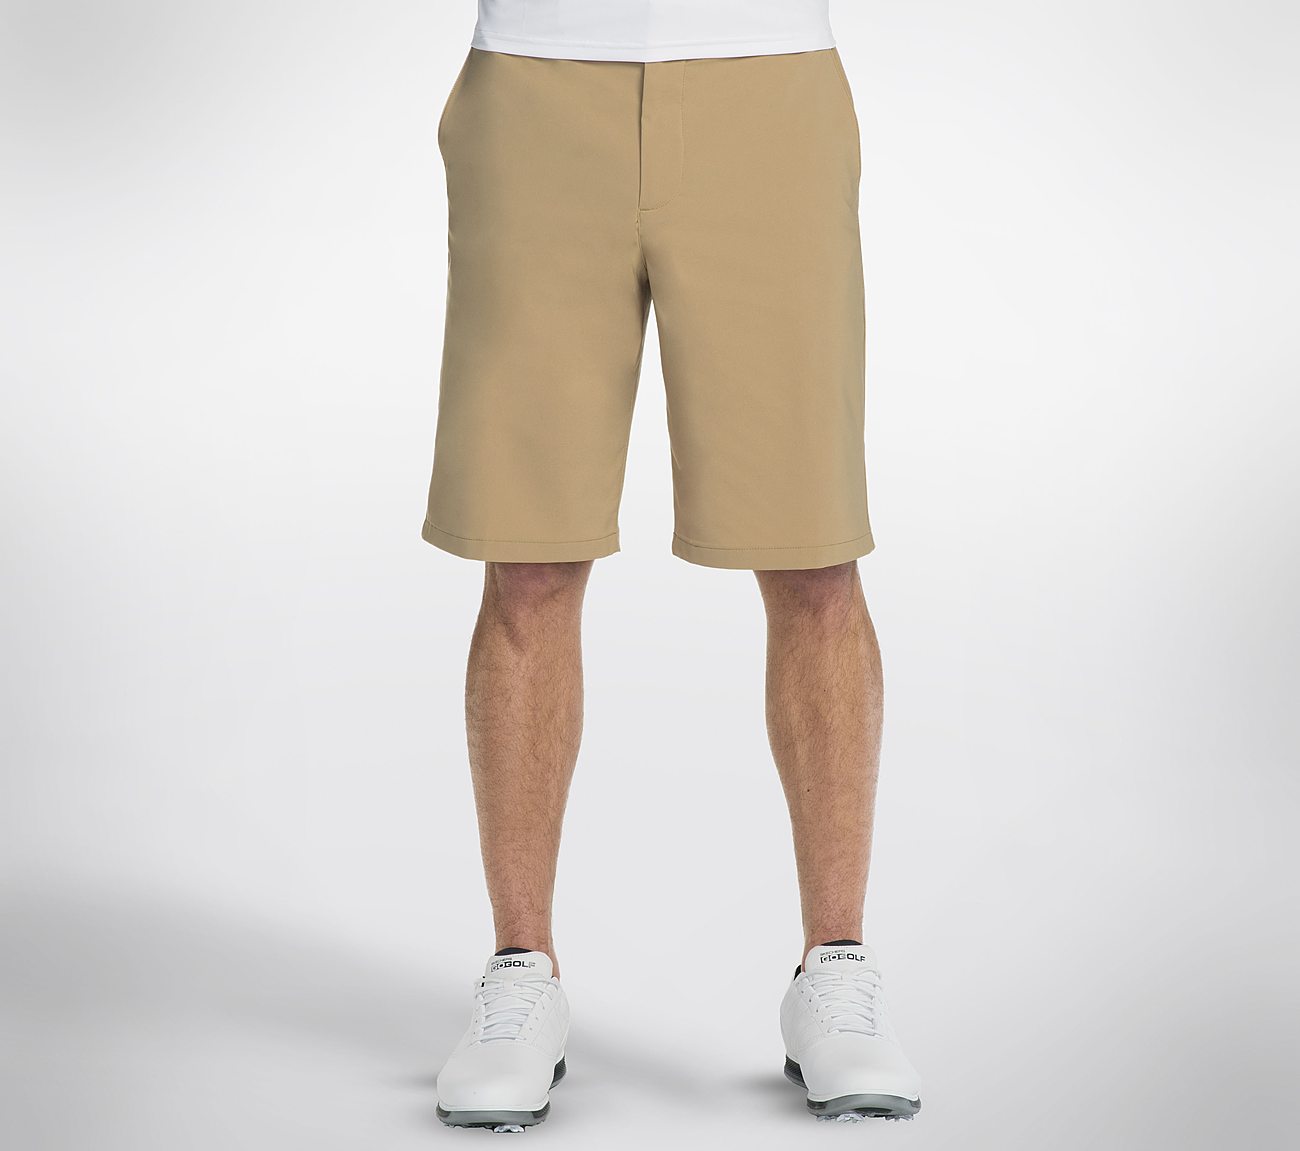 skechers go golf shorts